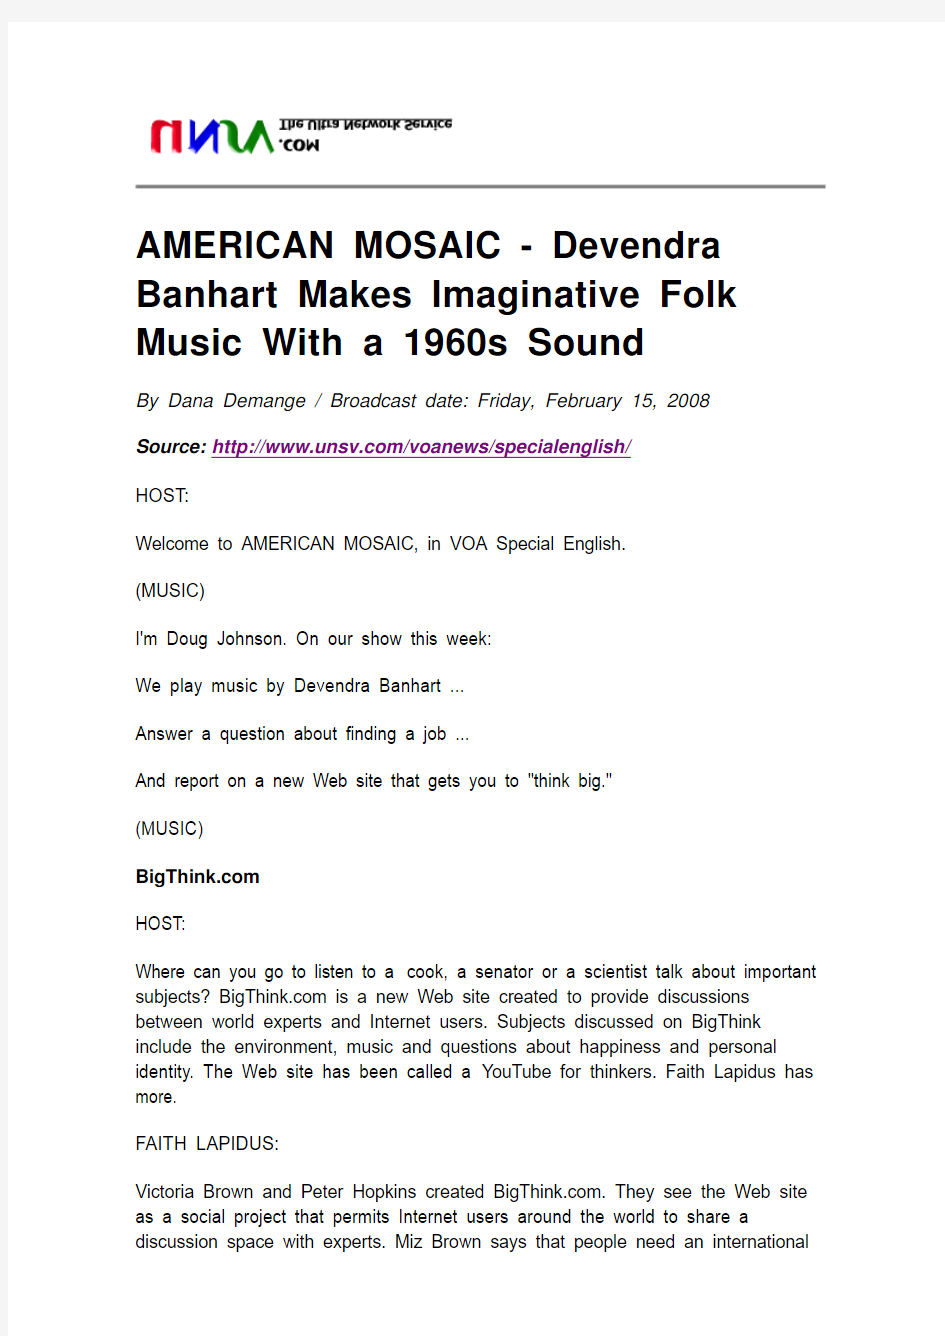 AMERICAN MOSAIC - Devendra Banhart Makes Imaginative Folk Music With a 1960s Sound